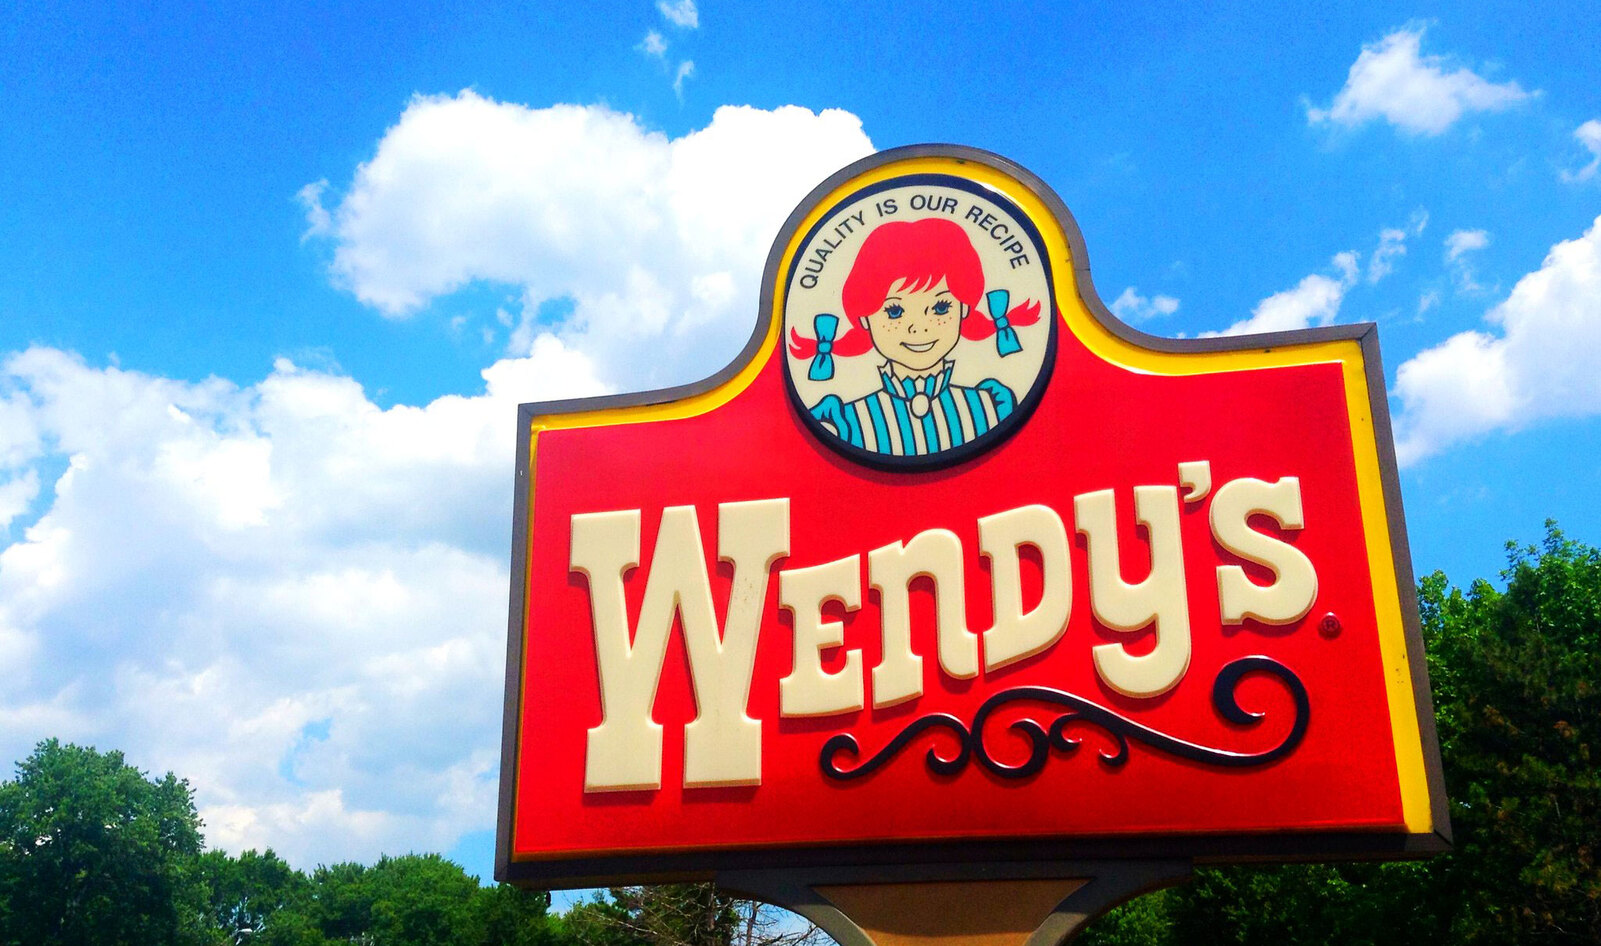 25,000 Customers Demand Vegan Options at Wendy’s&nbsp;